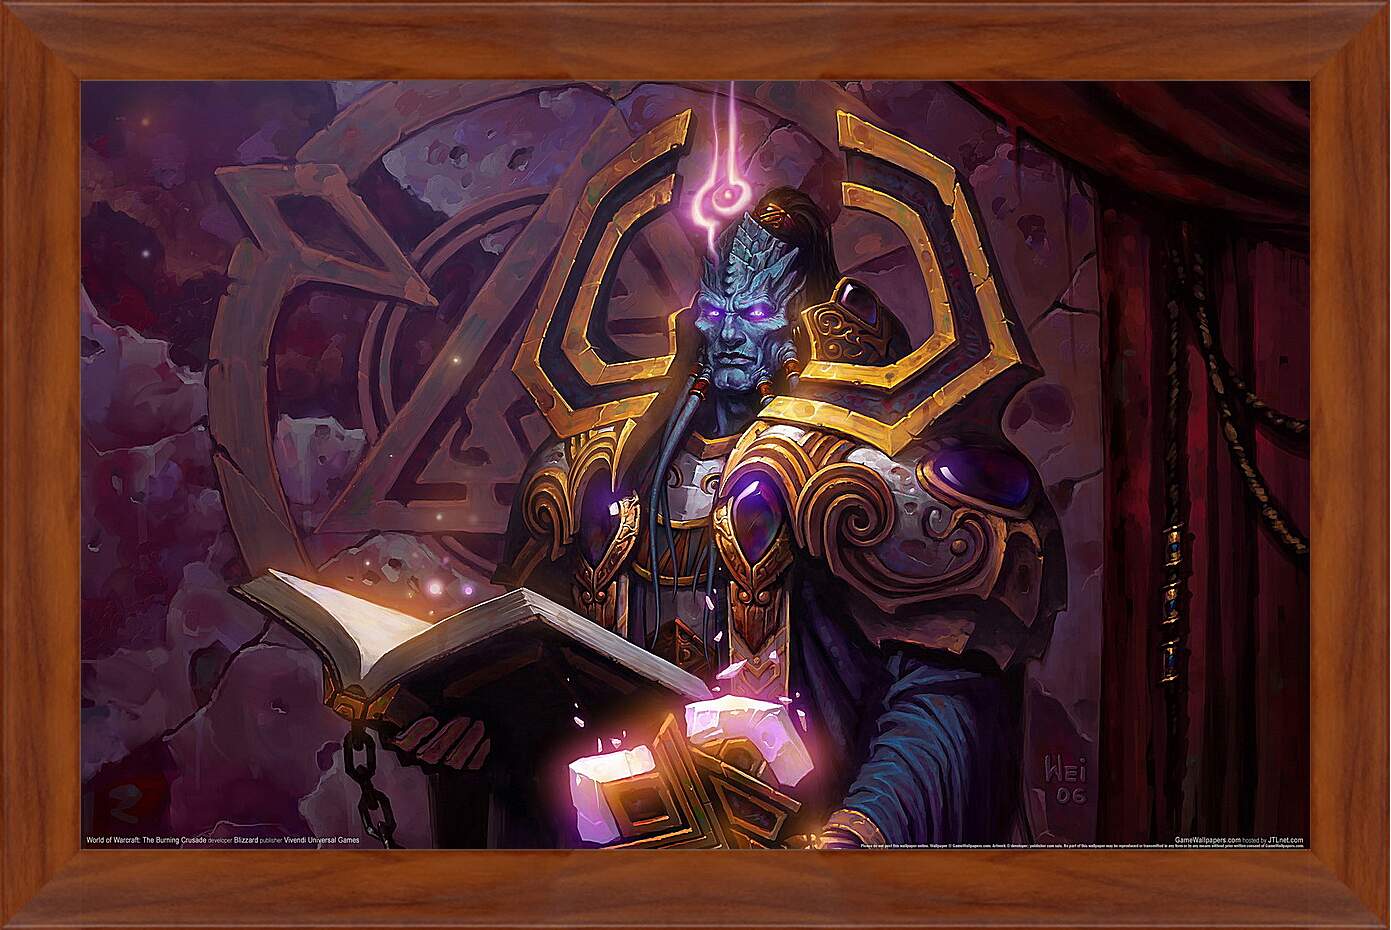 Картина в раме - World Of Warcraft: The Burning Crusade